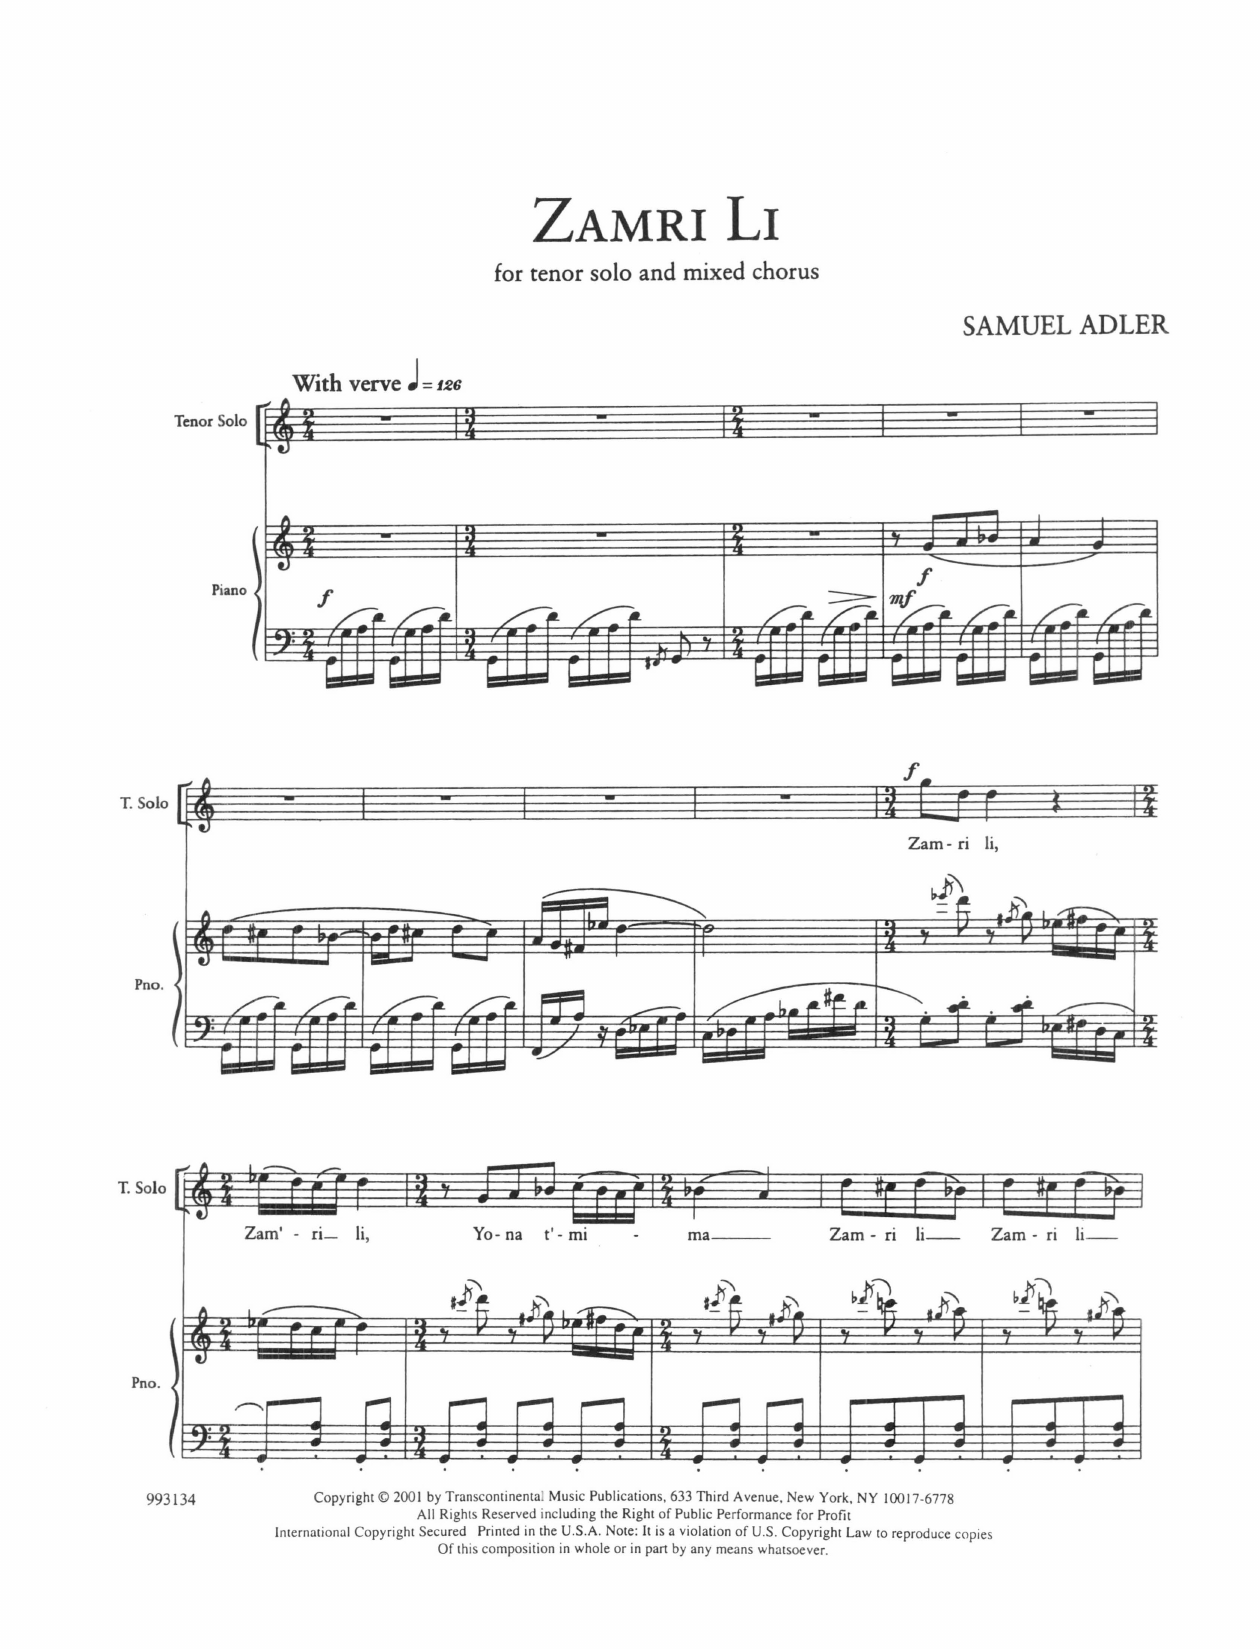 Download Samuel Adler Five Sephardic Choruses: Zamri Li Sheet Music and learn how to play SATB Choir PDF digital score in minutes